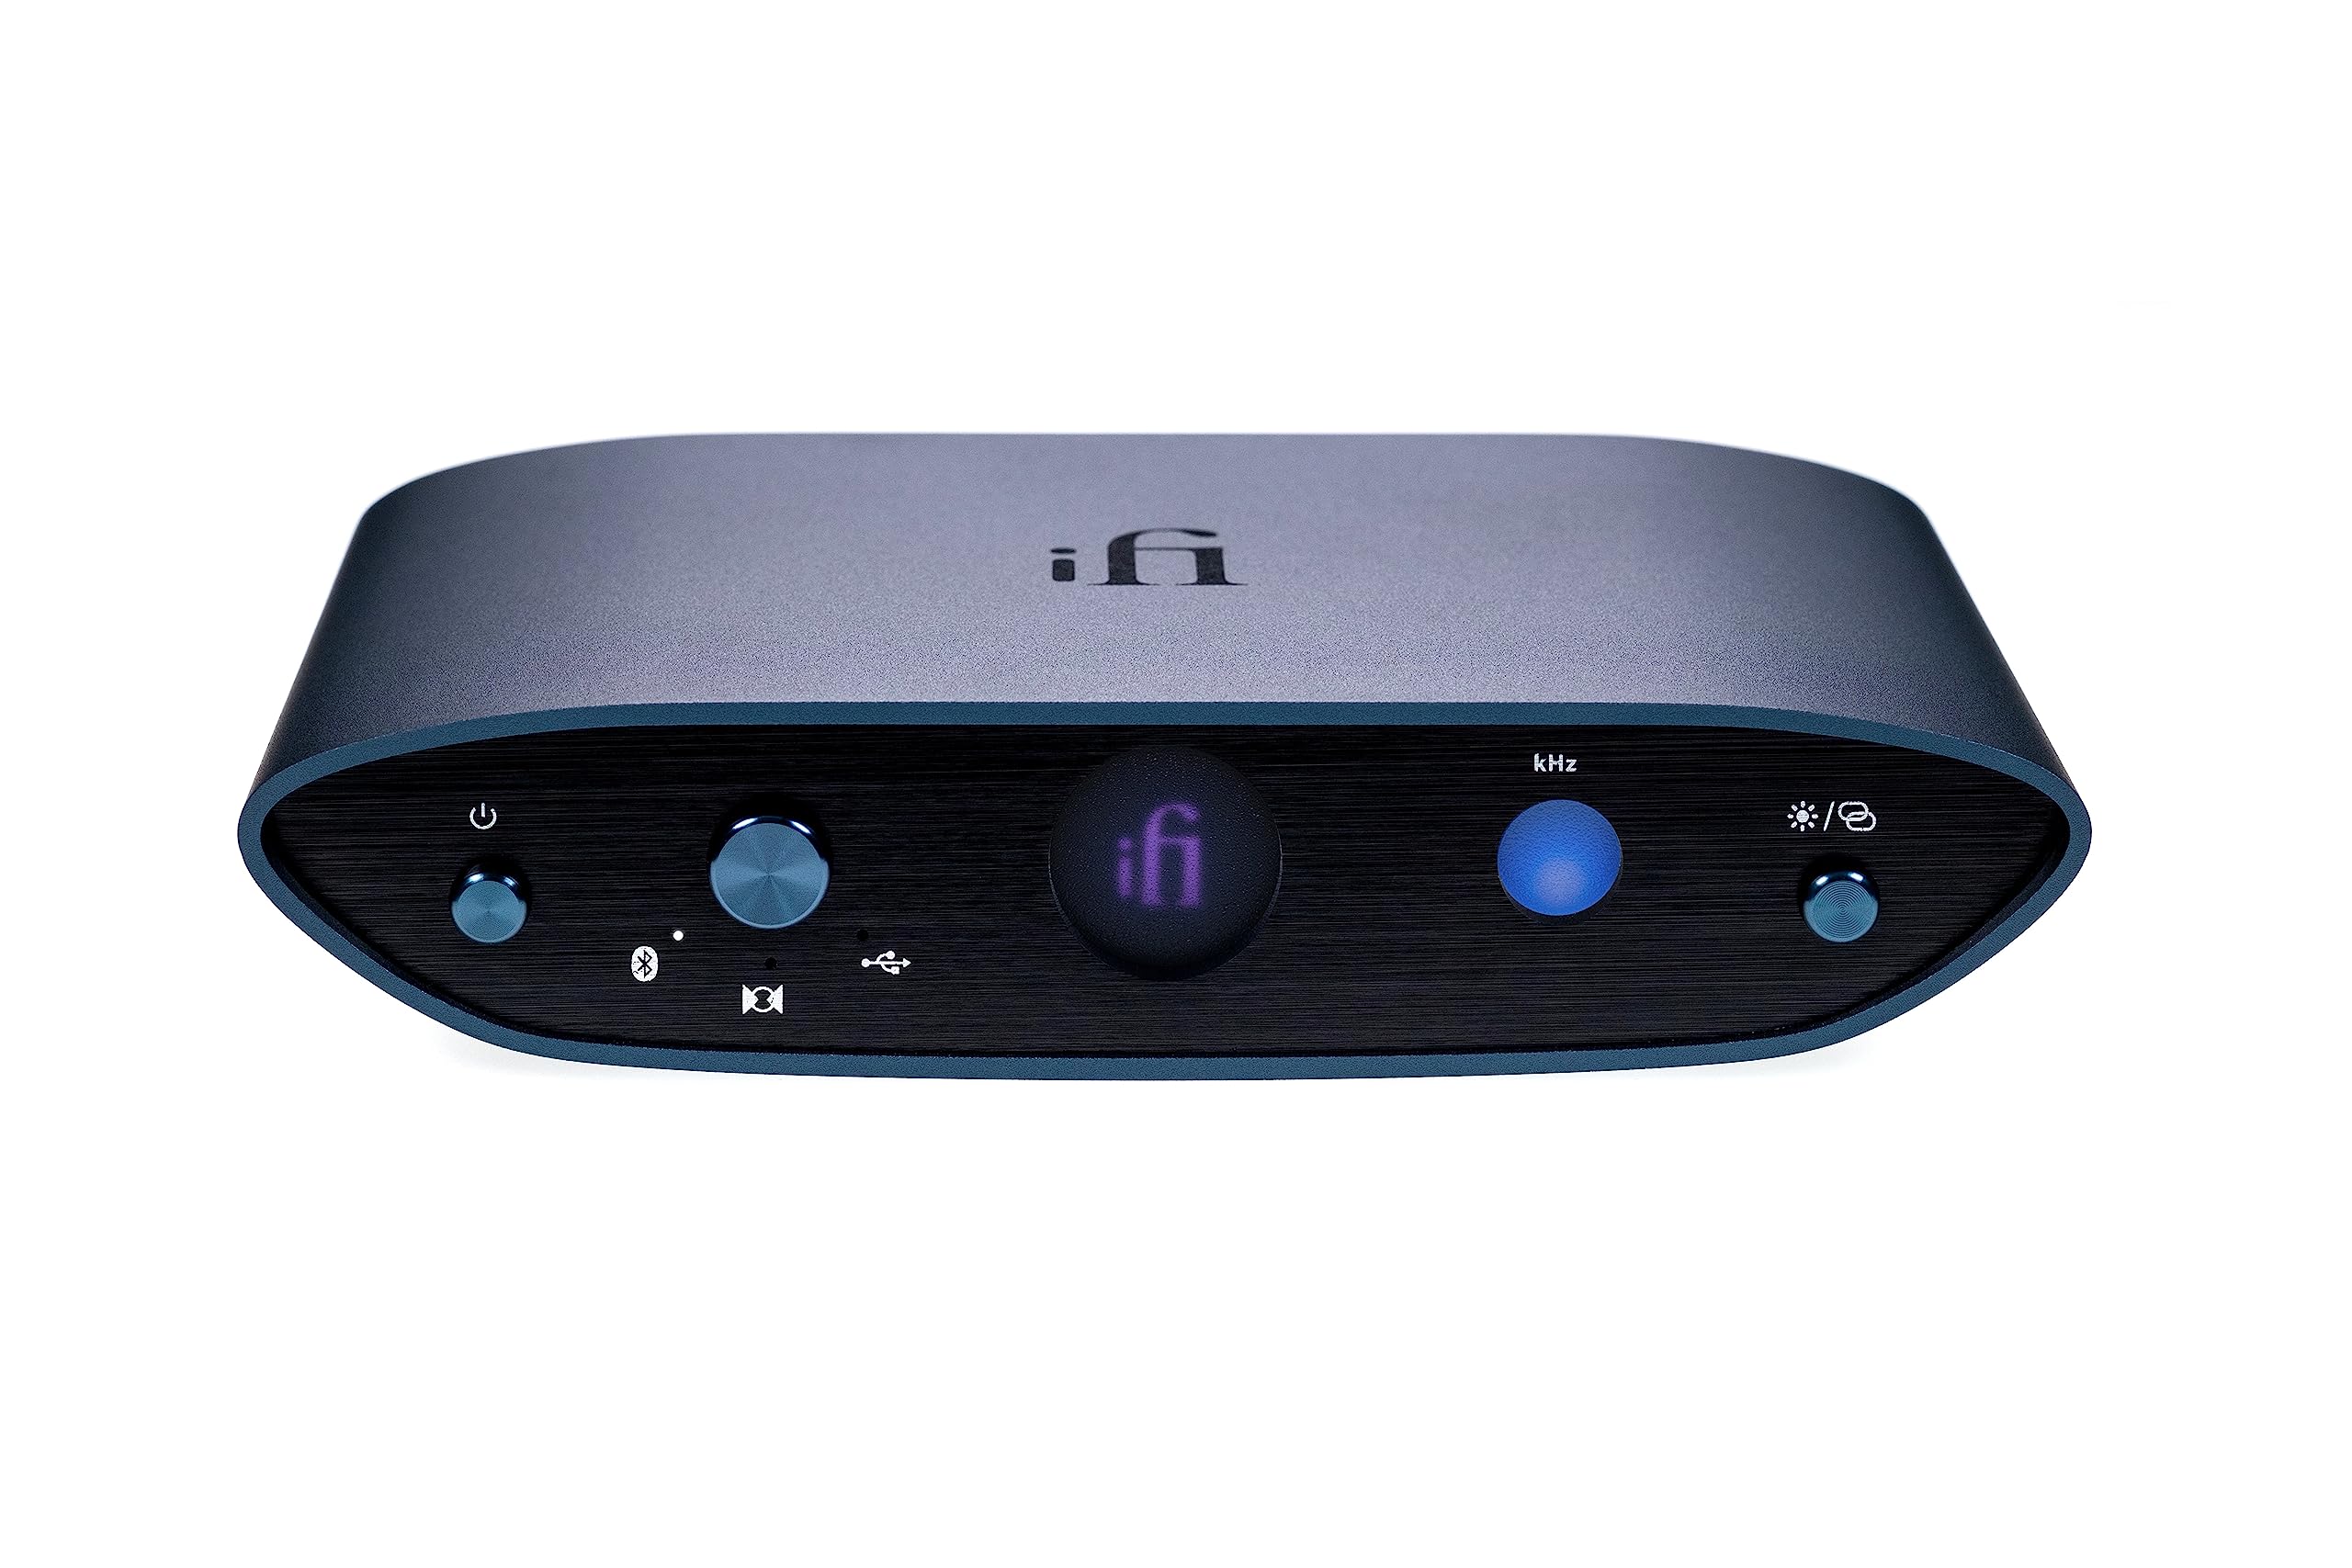 iFi audio ZEN One Signature オーディオハブDAC iPower II 5V付属 【国内正規品】